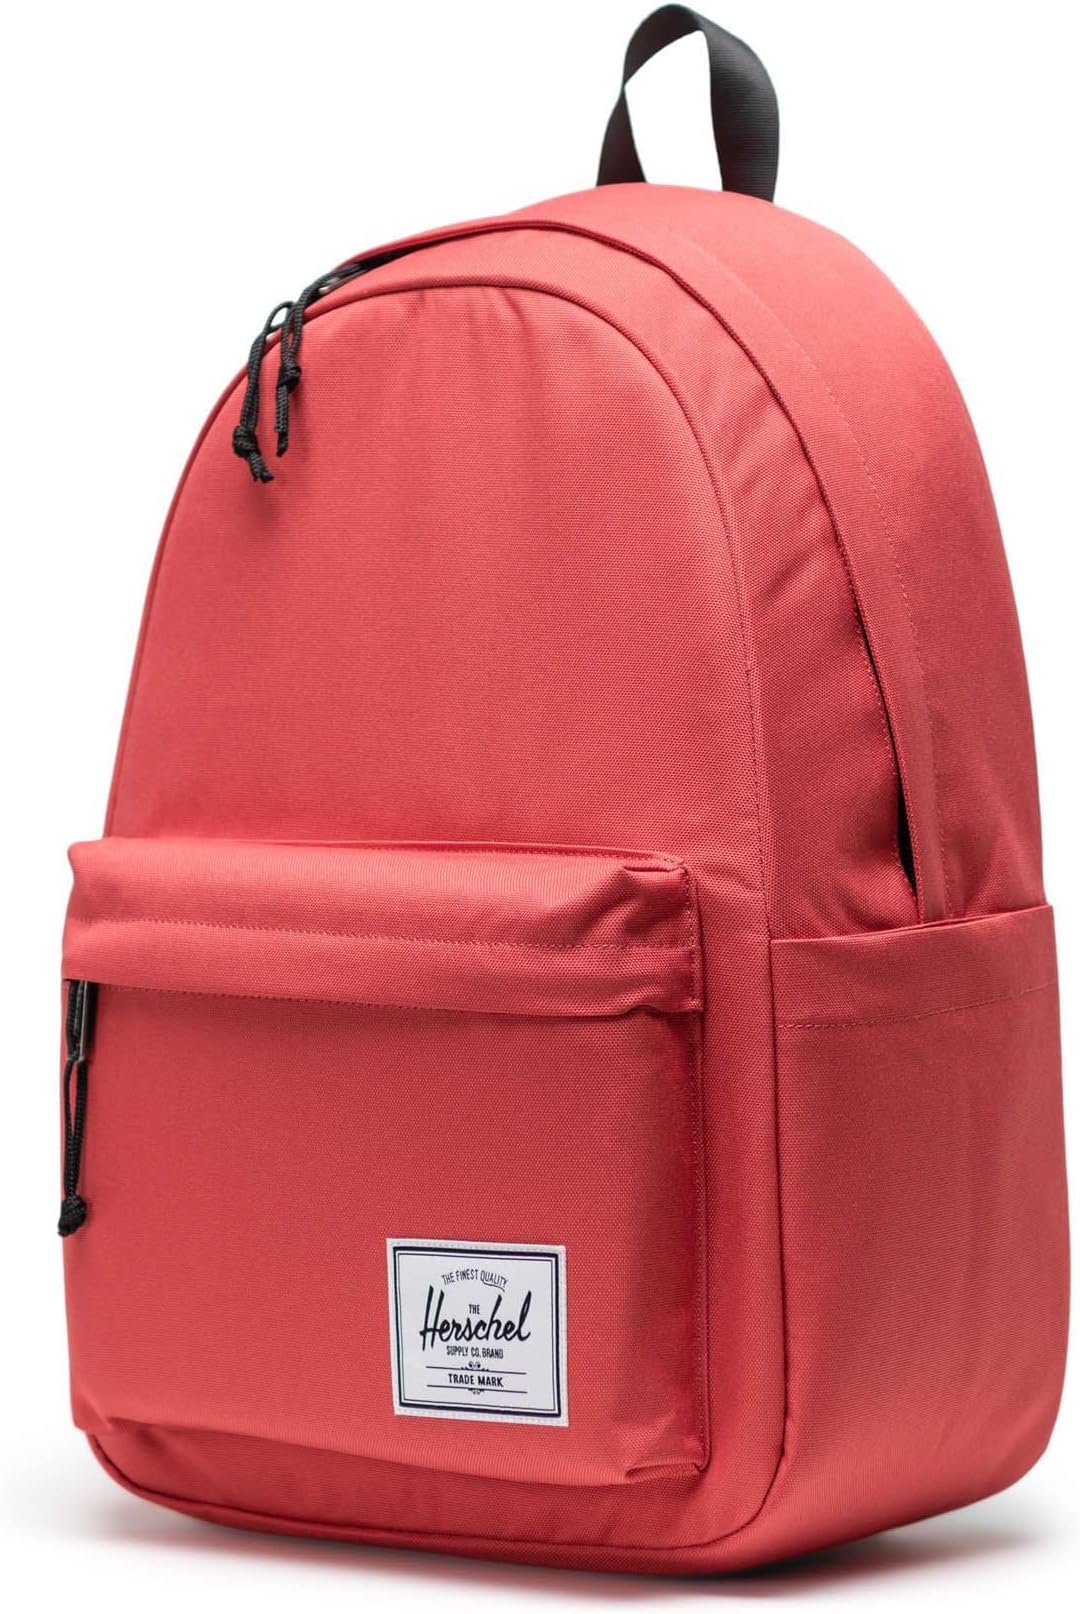 классический рюкзак herschel supply co xl цвет rose brown Рюкзак Classic XL Backpack Herschel Supply Co., цвет Mineral Rose